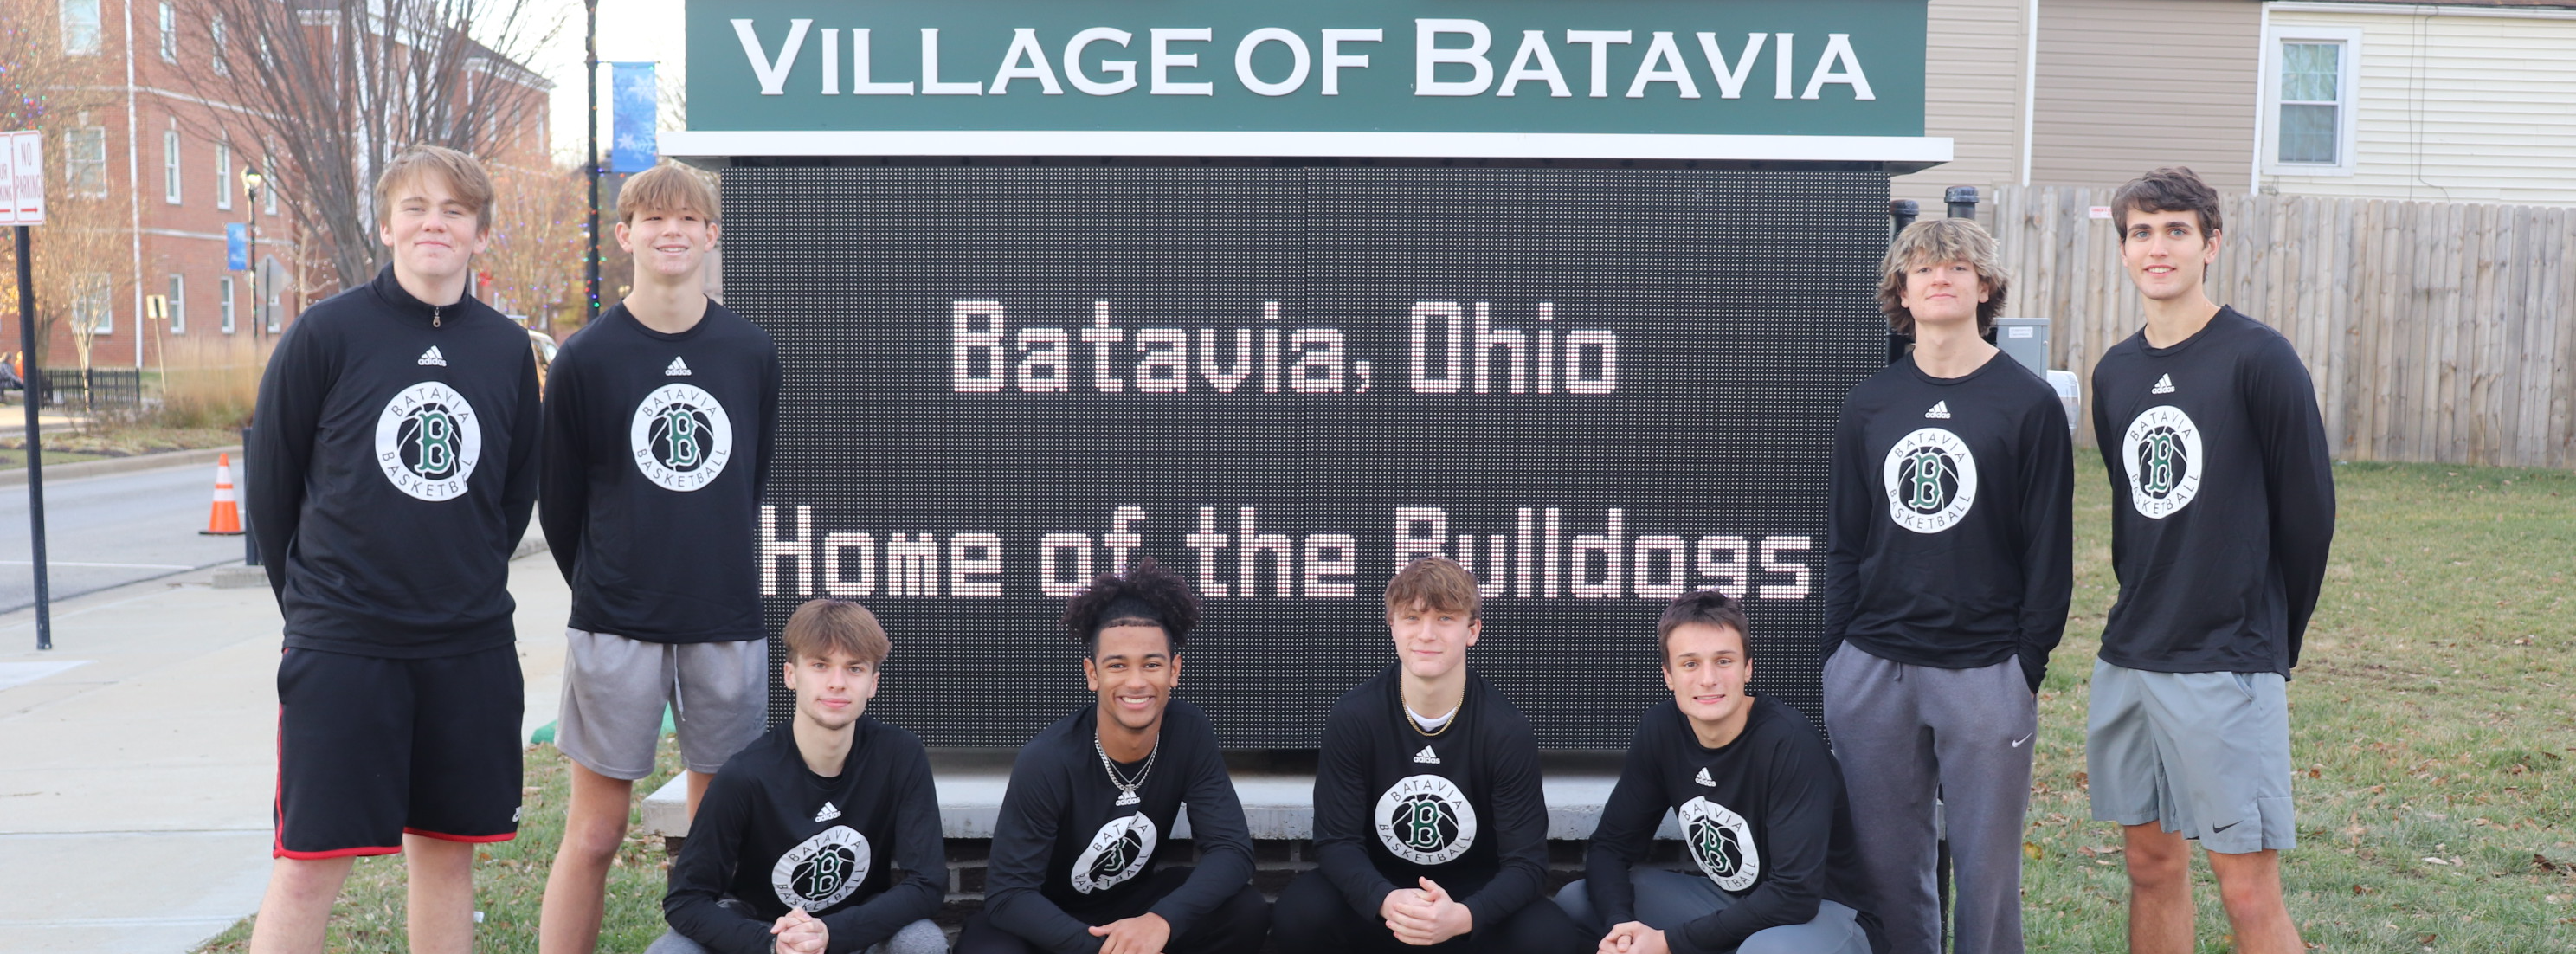 batavia boys basketball program